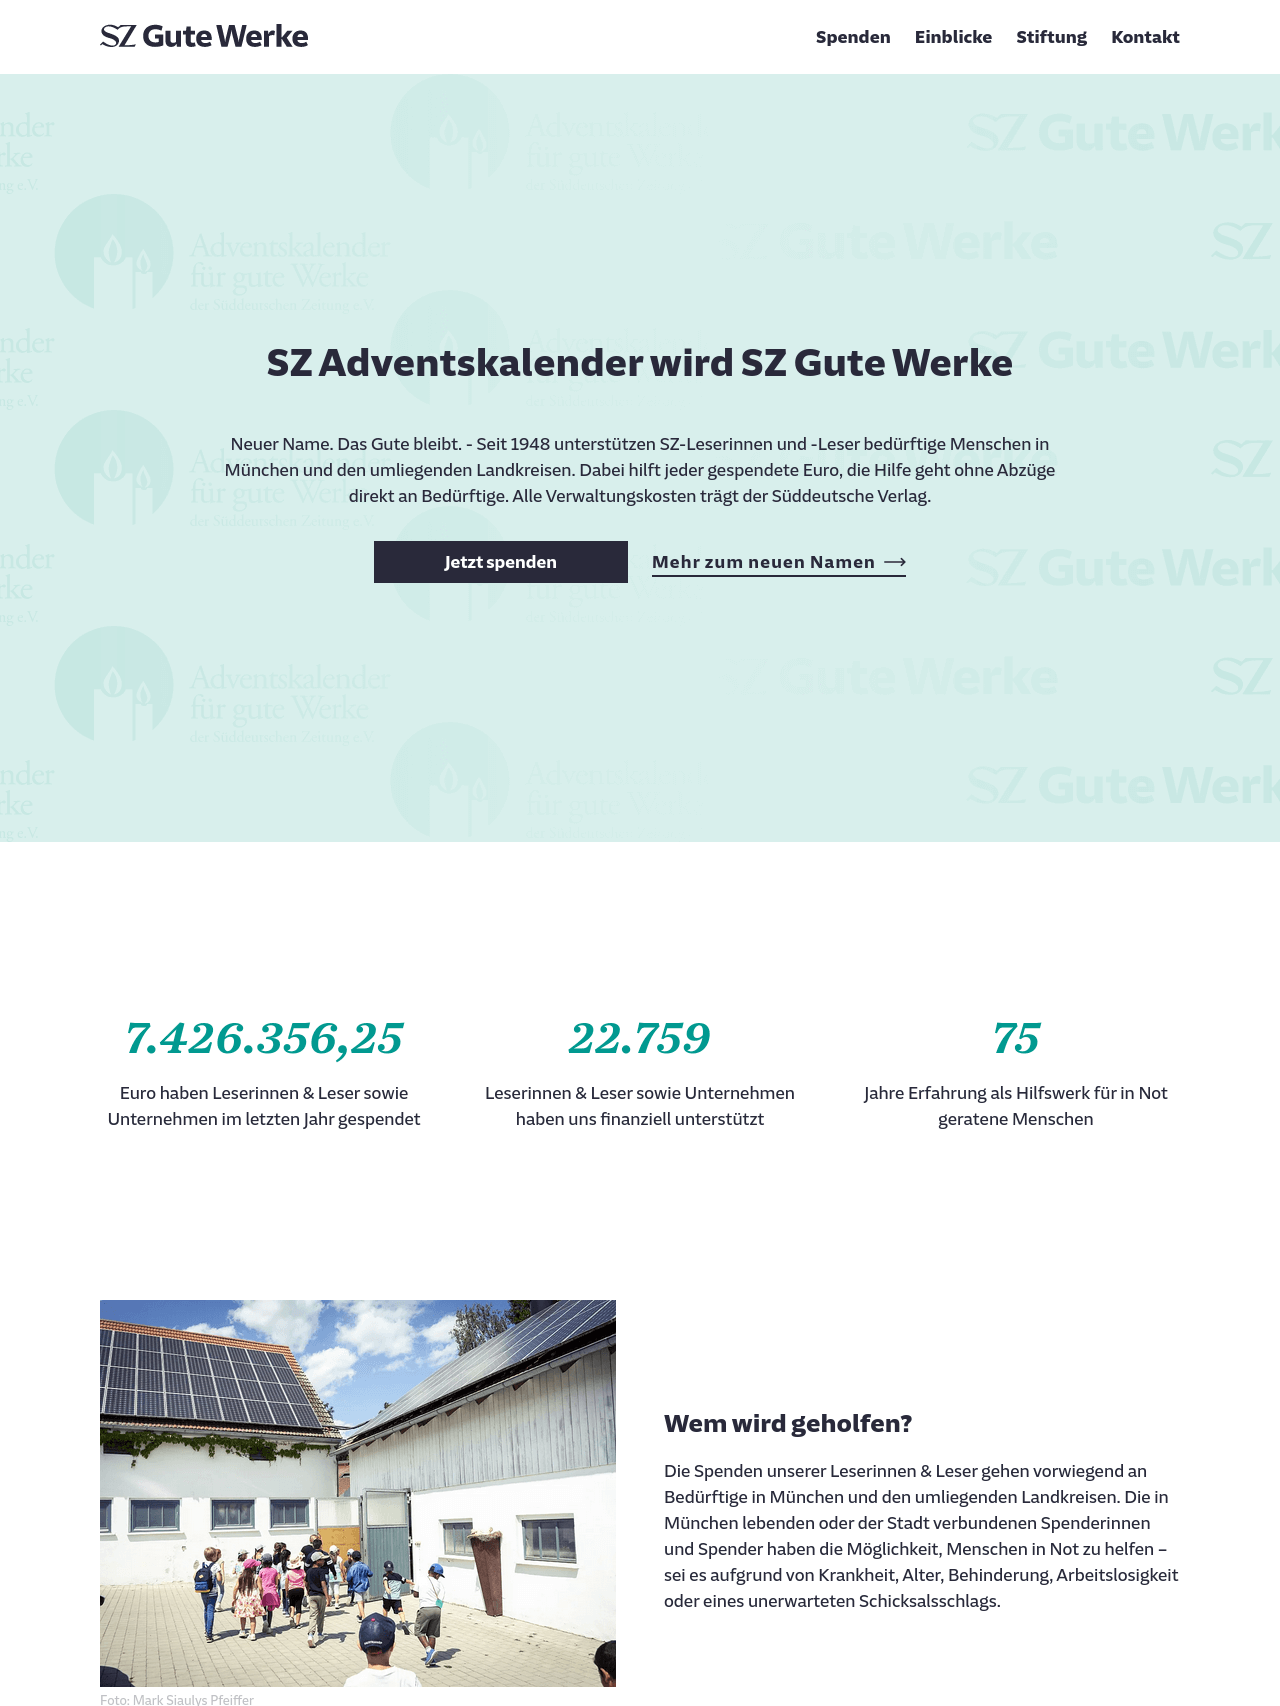 Screenshot of the SZ Gute Werke website